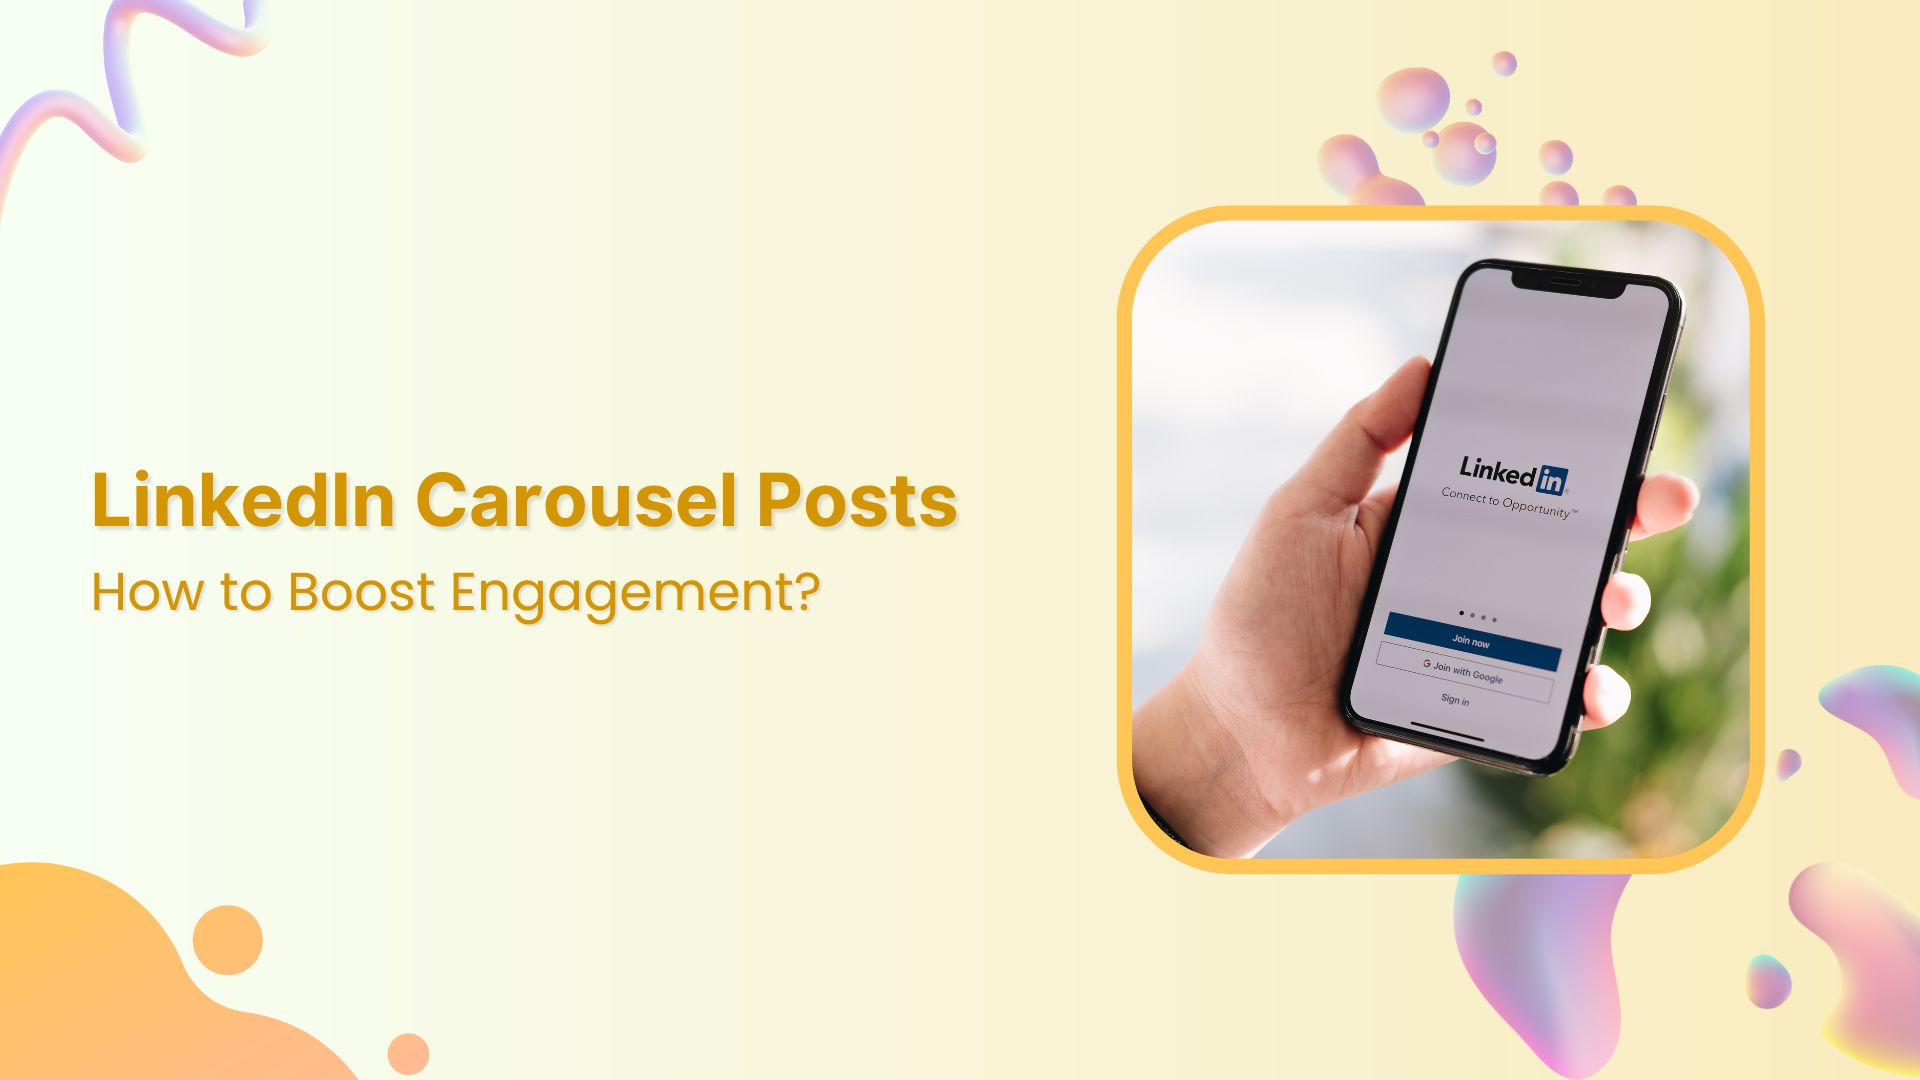 LinkedIn carousel posts